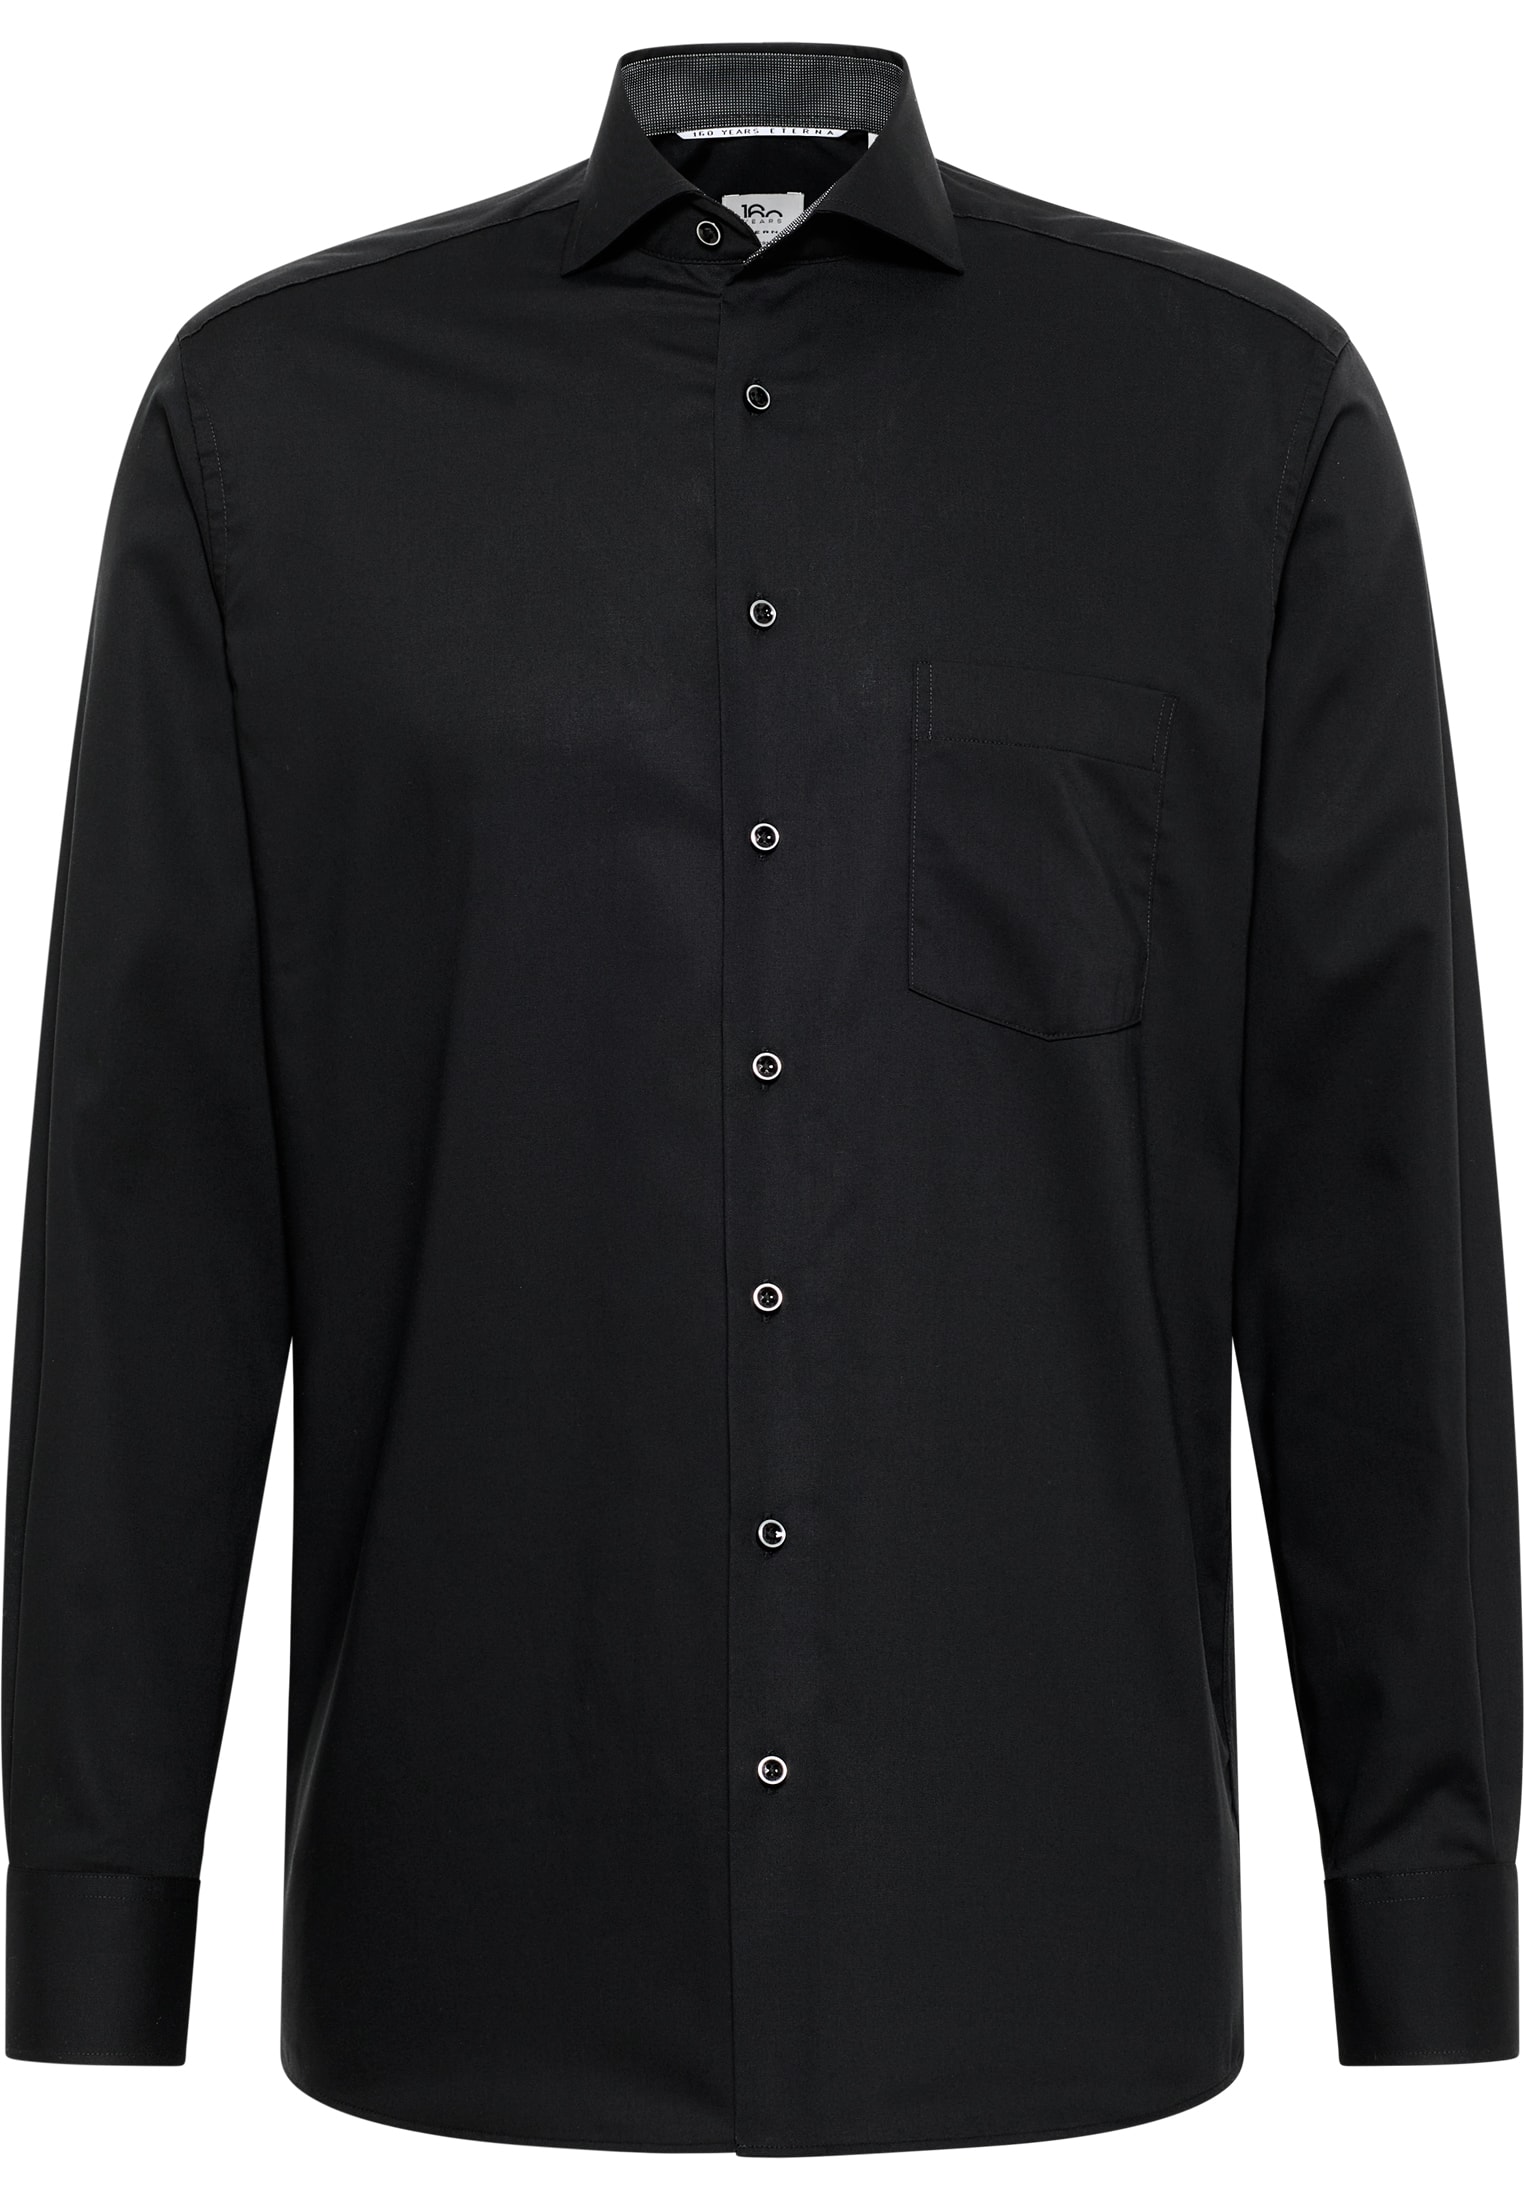 MODERN FIT Shirt in black plain